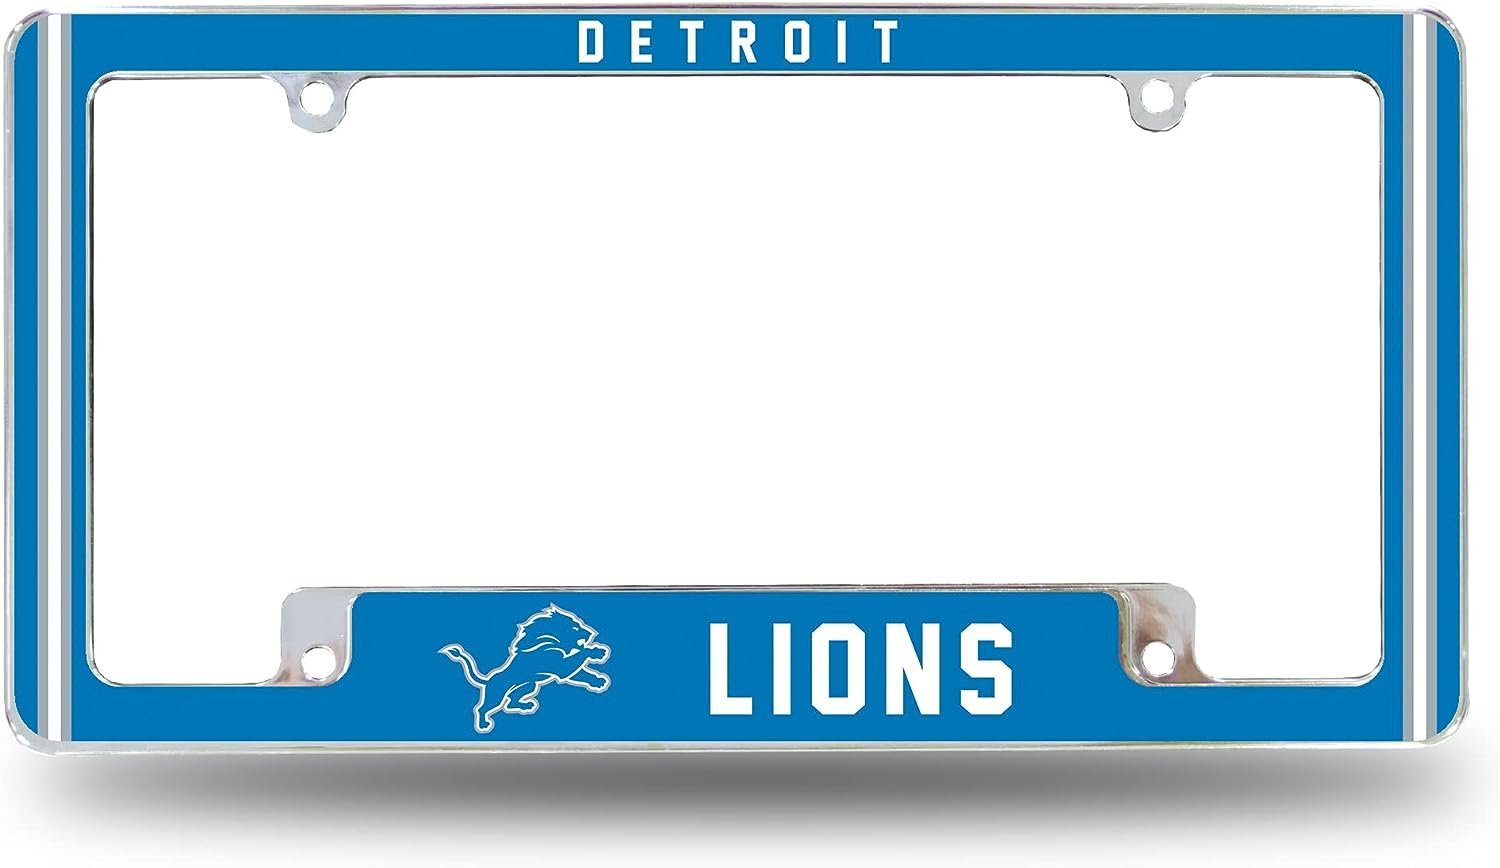 Detroit Lions Metal License Plate Frame Chrome Tag Cover Alternate Design 6x12 Inch